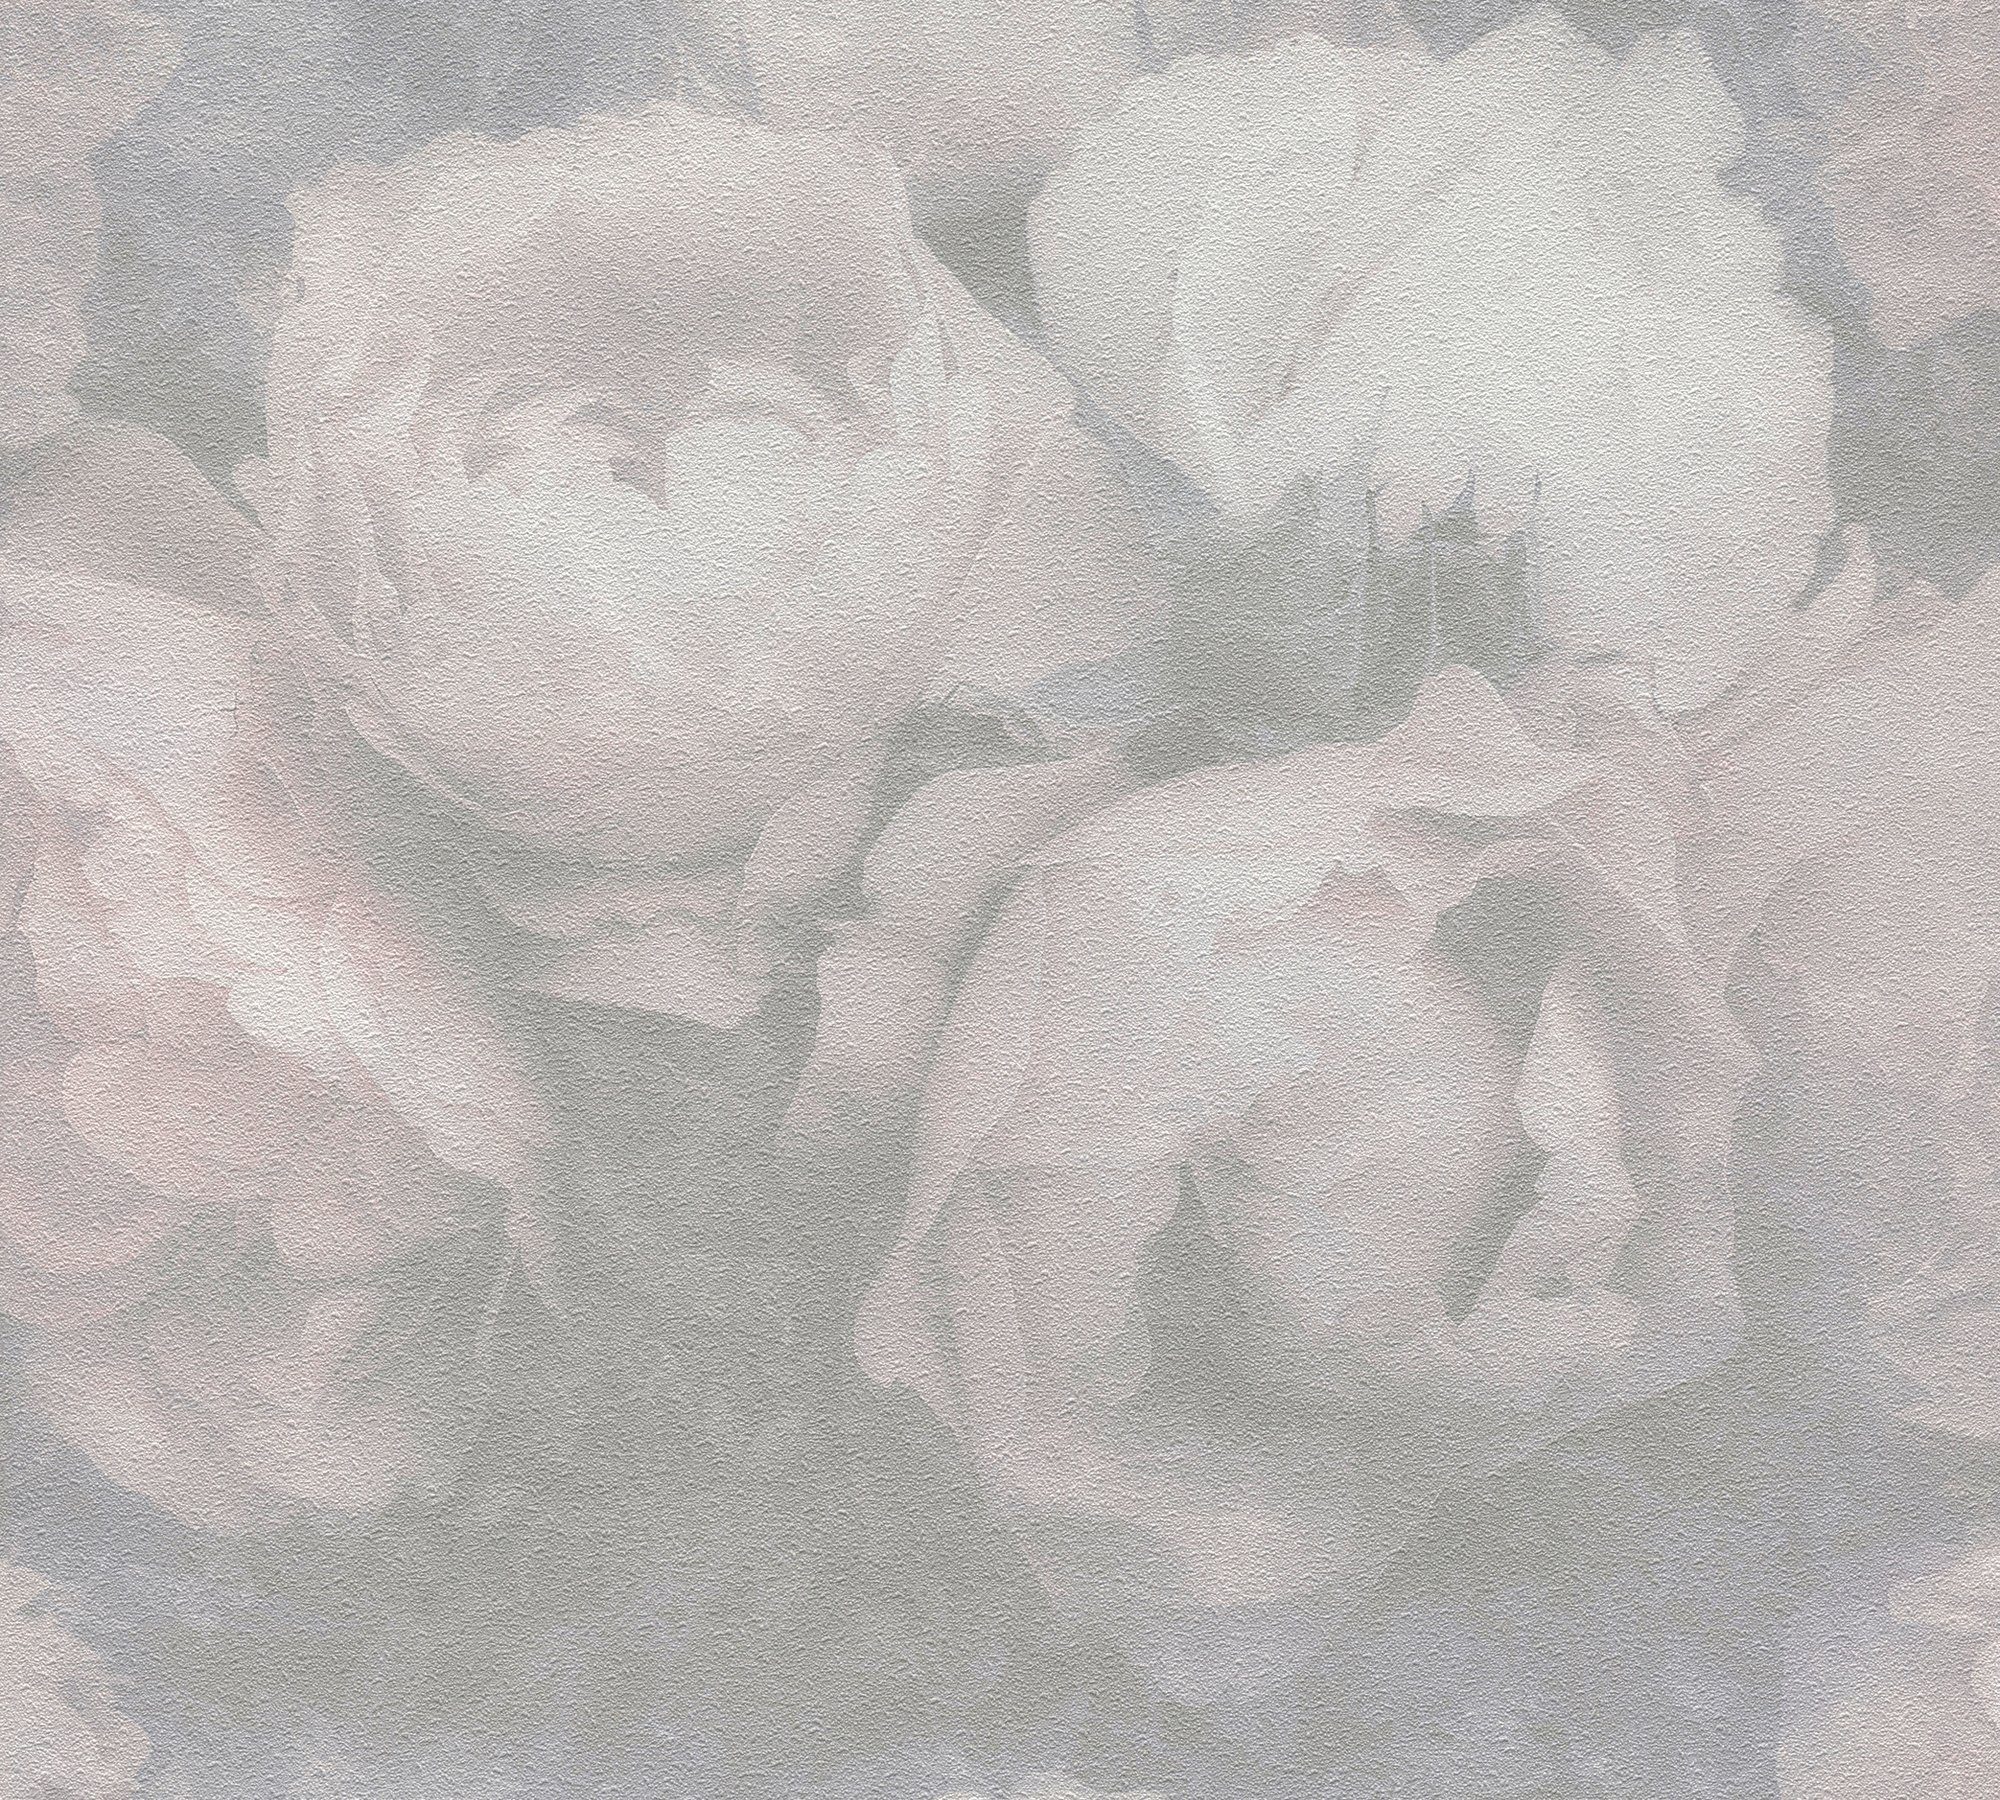 Blumen living New Dream Création floral, mit weiß walls Romantic Vliestapete romantischen Rosen, Tapete Walls A.S.